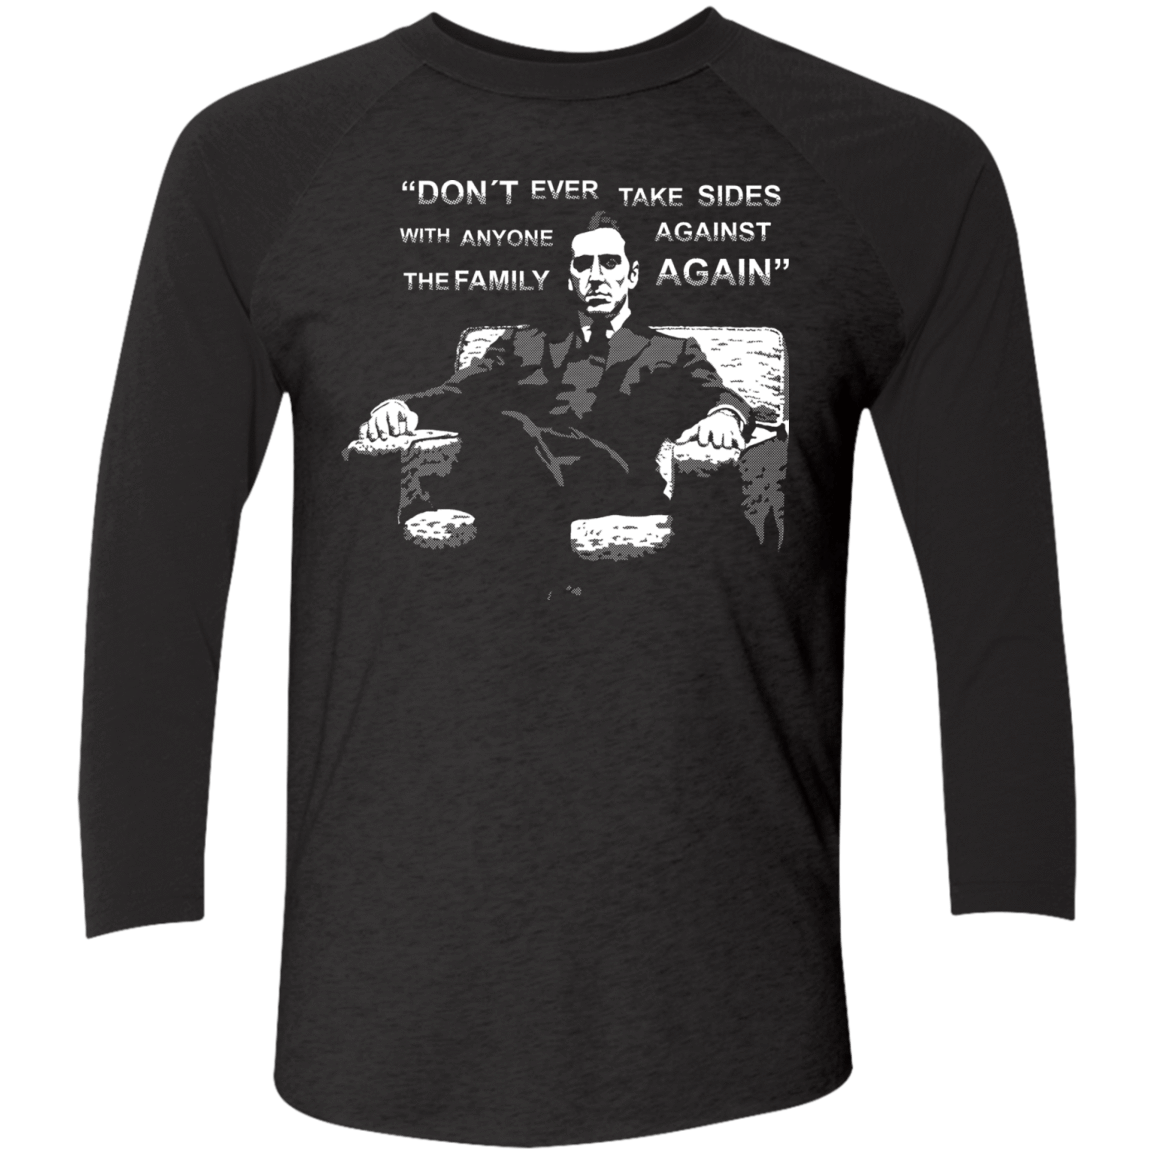 T-Shirts Vintage Black/Vintage Black / X-Small M Corleone Men's Triblend 3/4 Sleeve